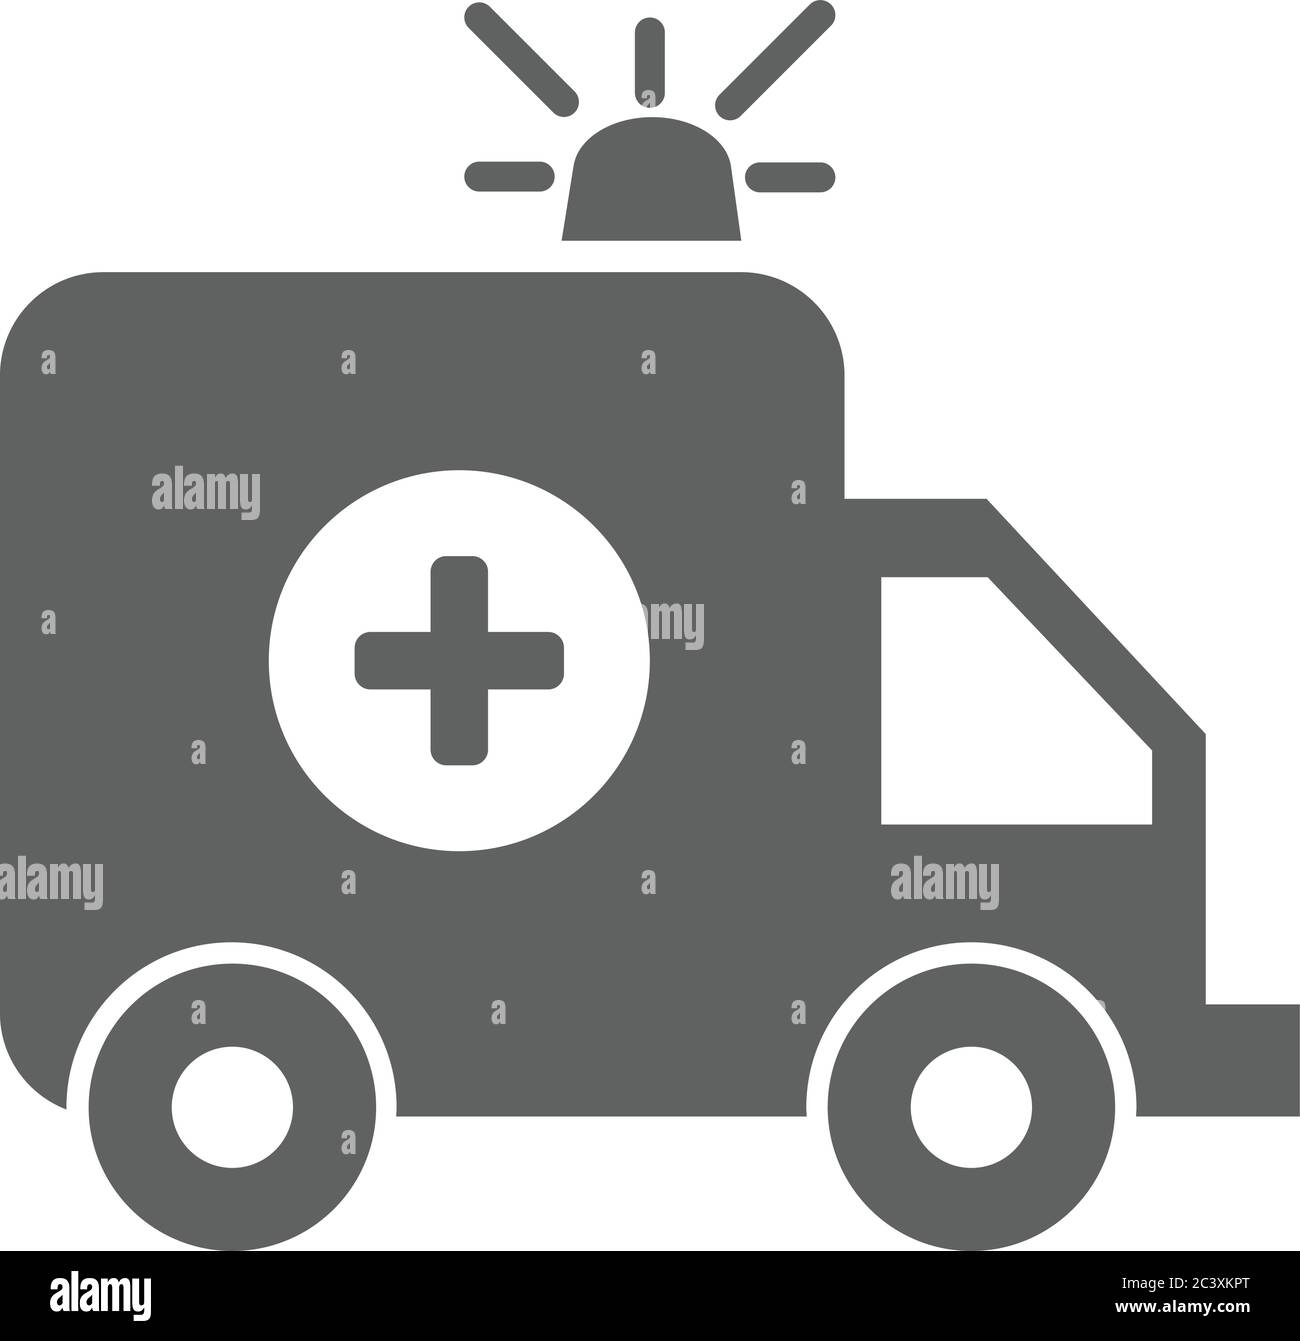 Ambulance or medical car icon vector design illustration Stock Vector